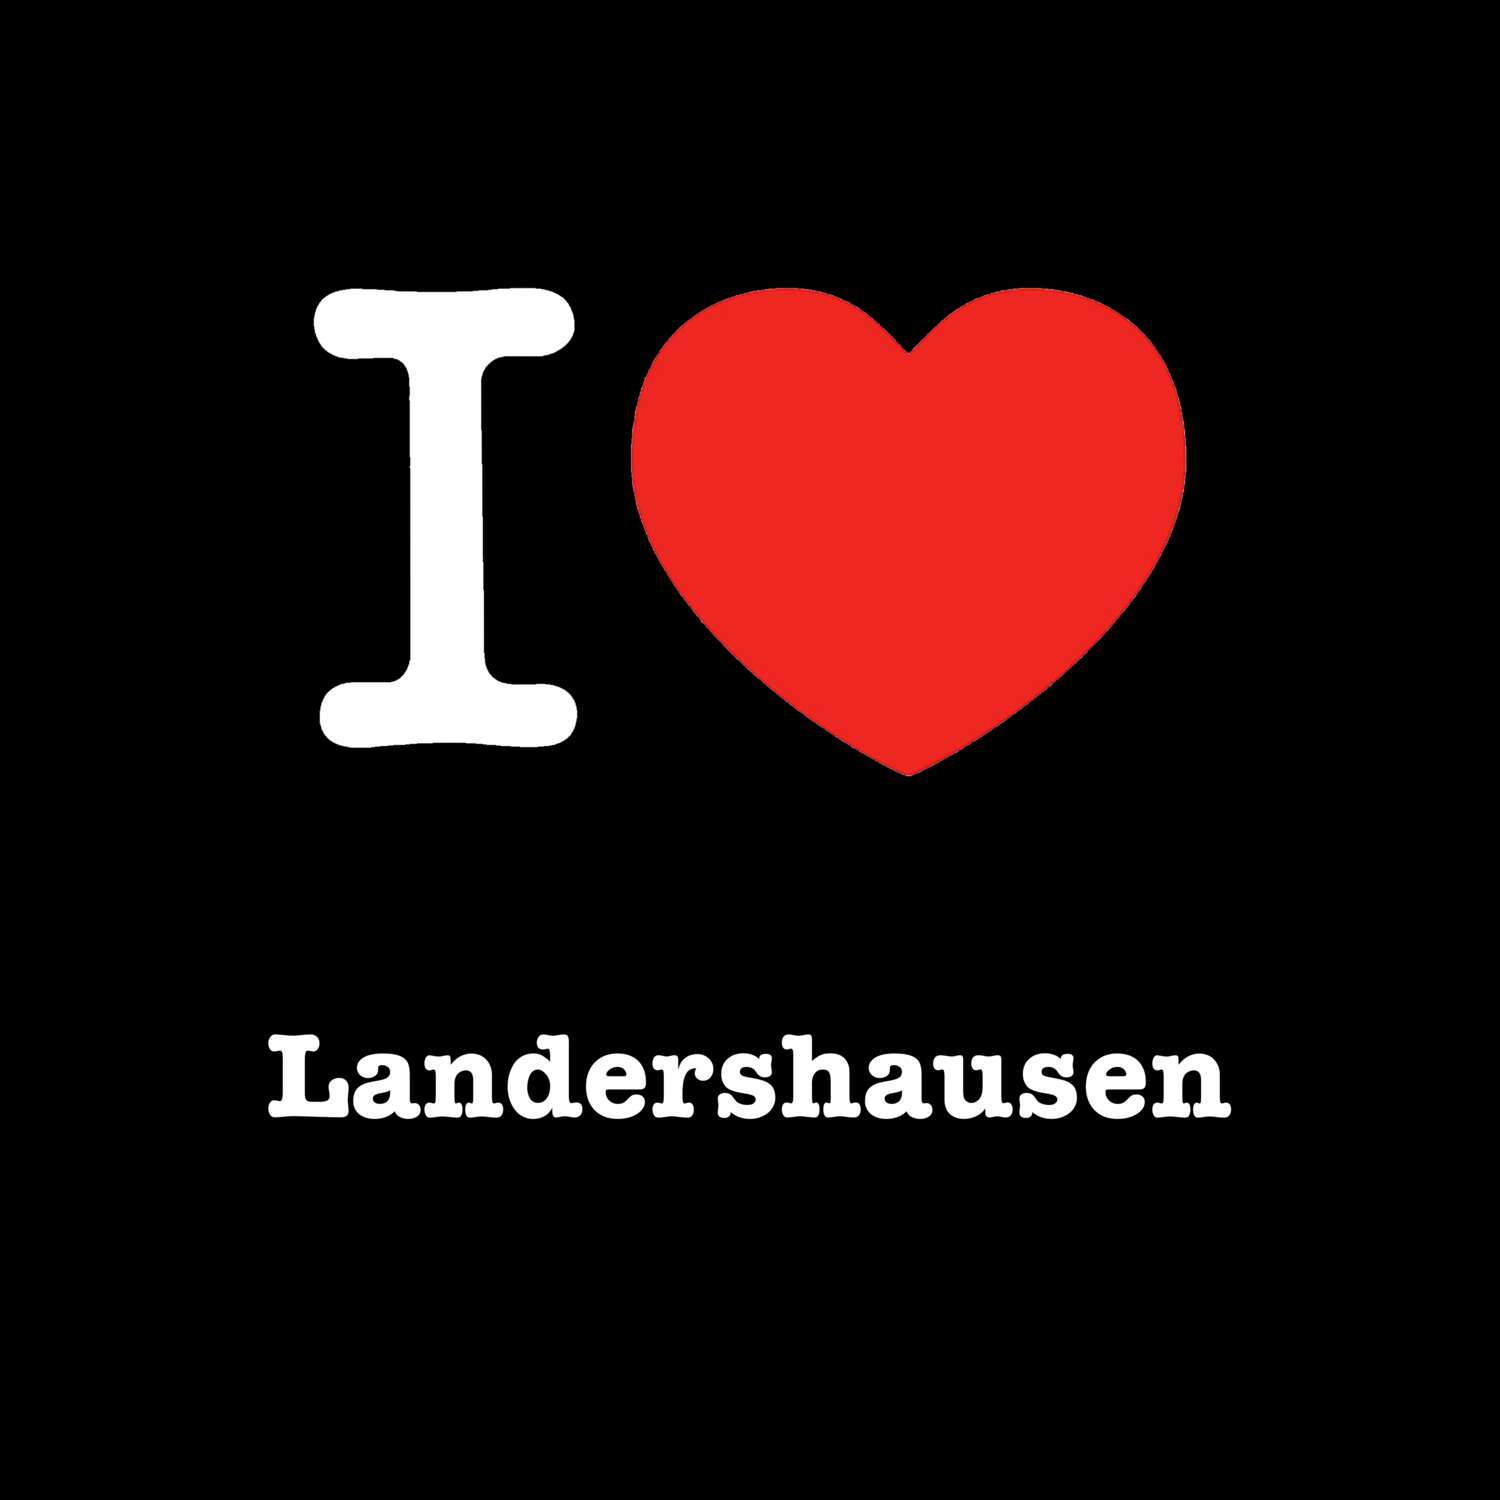 Landershausen T-Shirt »I love«